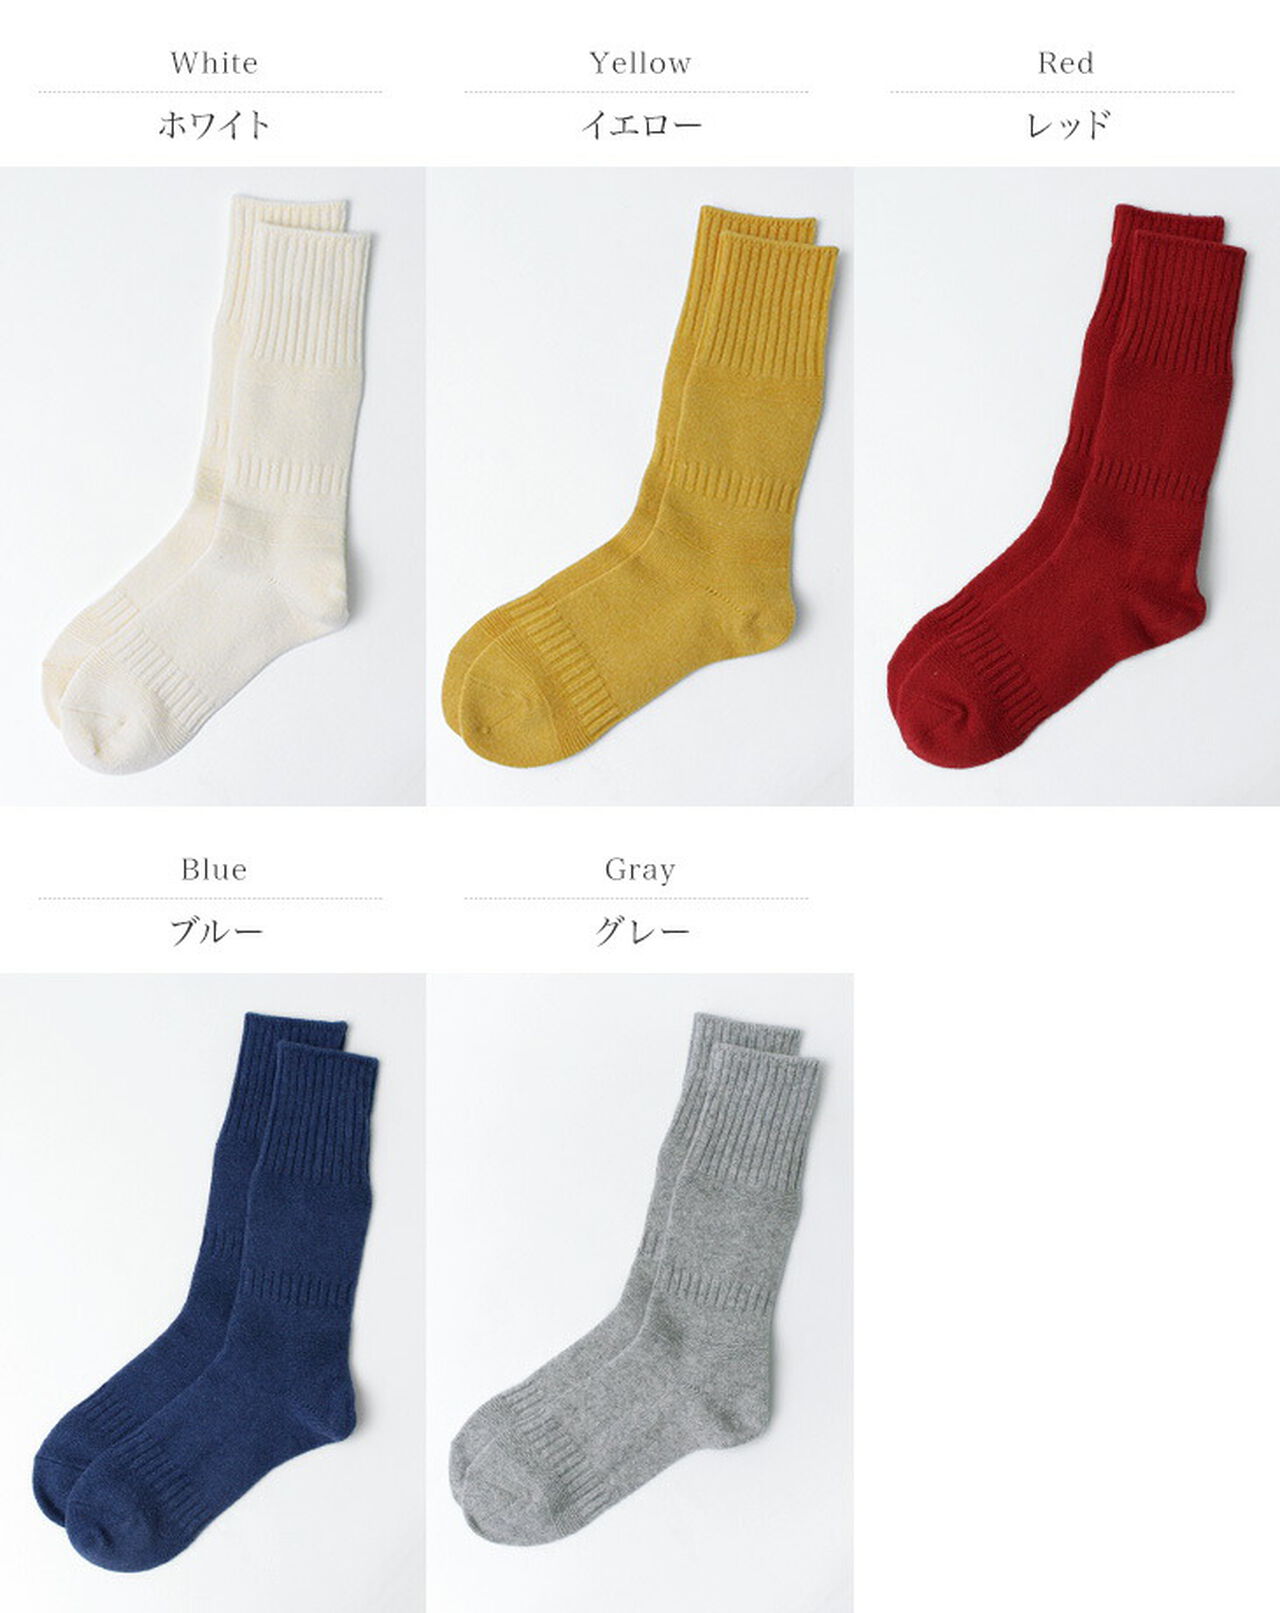 R1378 Gandy pattern crew socks,, large image number 2